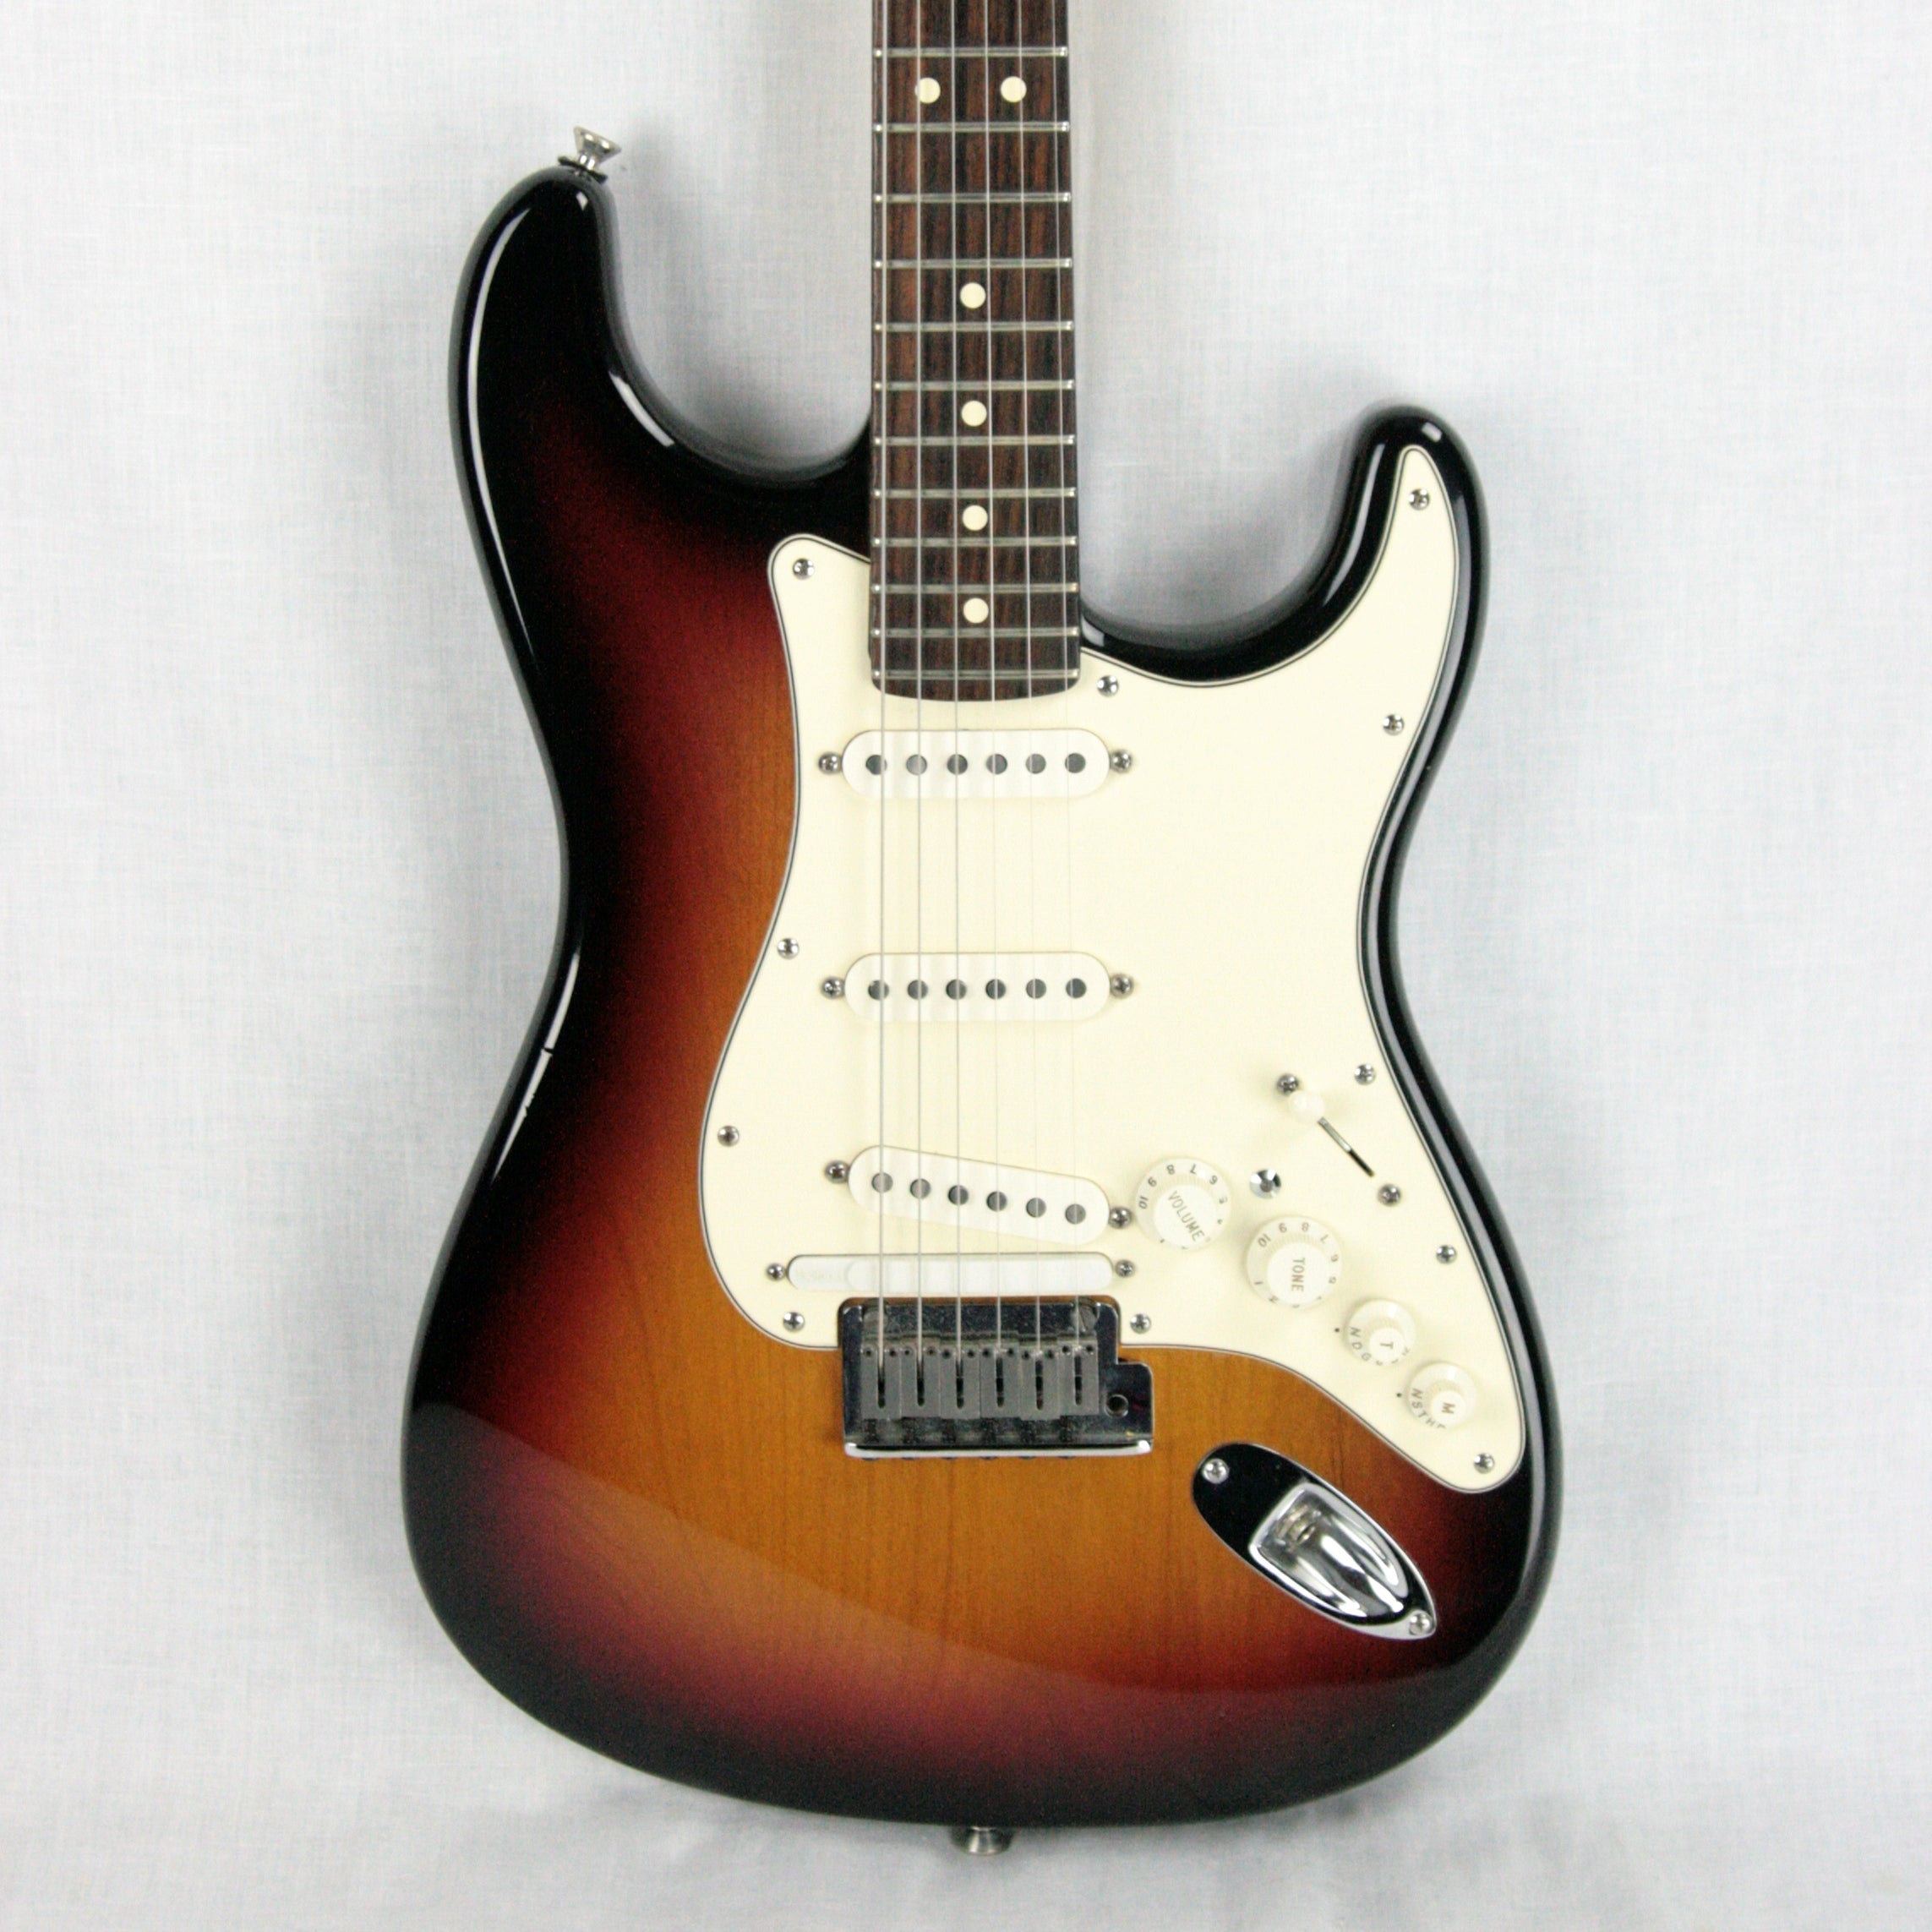 2006 Fender American VG Stratocaster Virtual Guitar Strat! USA Sunburst Rosewood Neck